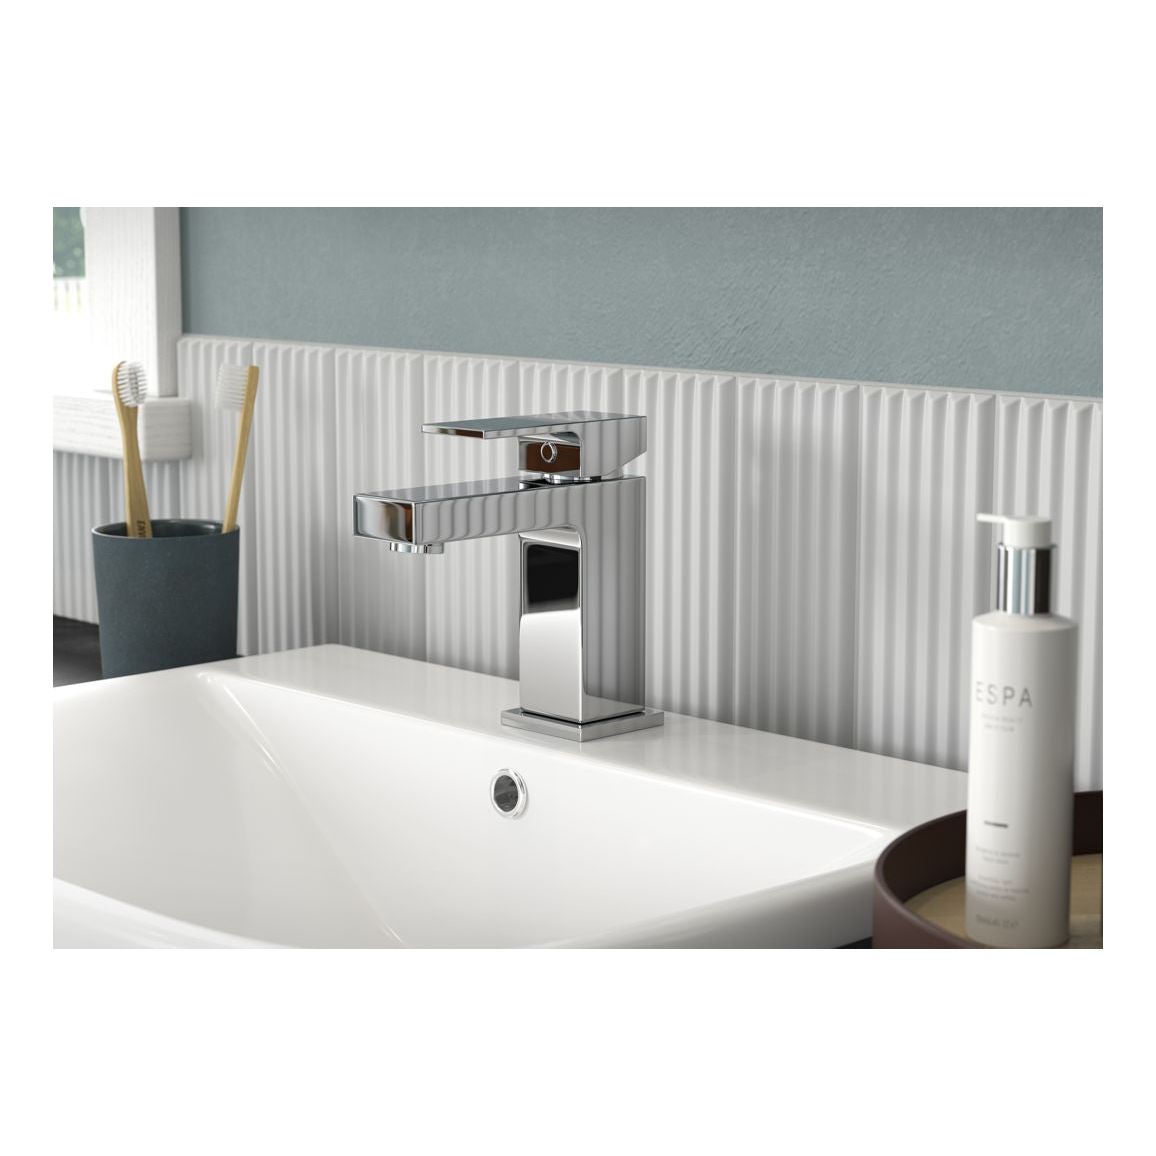 Willinghby Floor Standing Bath/Shower Mixer - Chrome